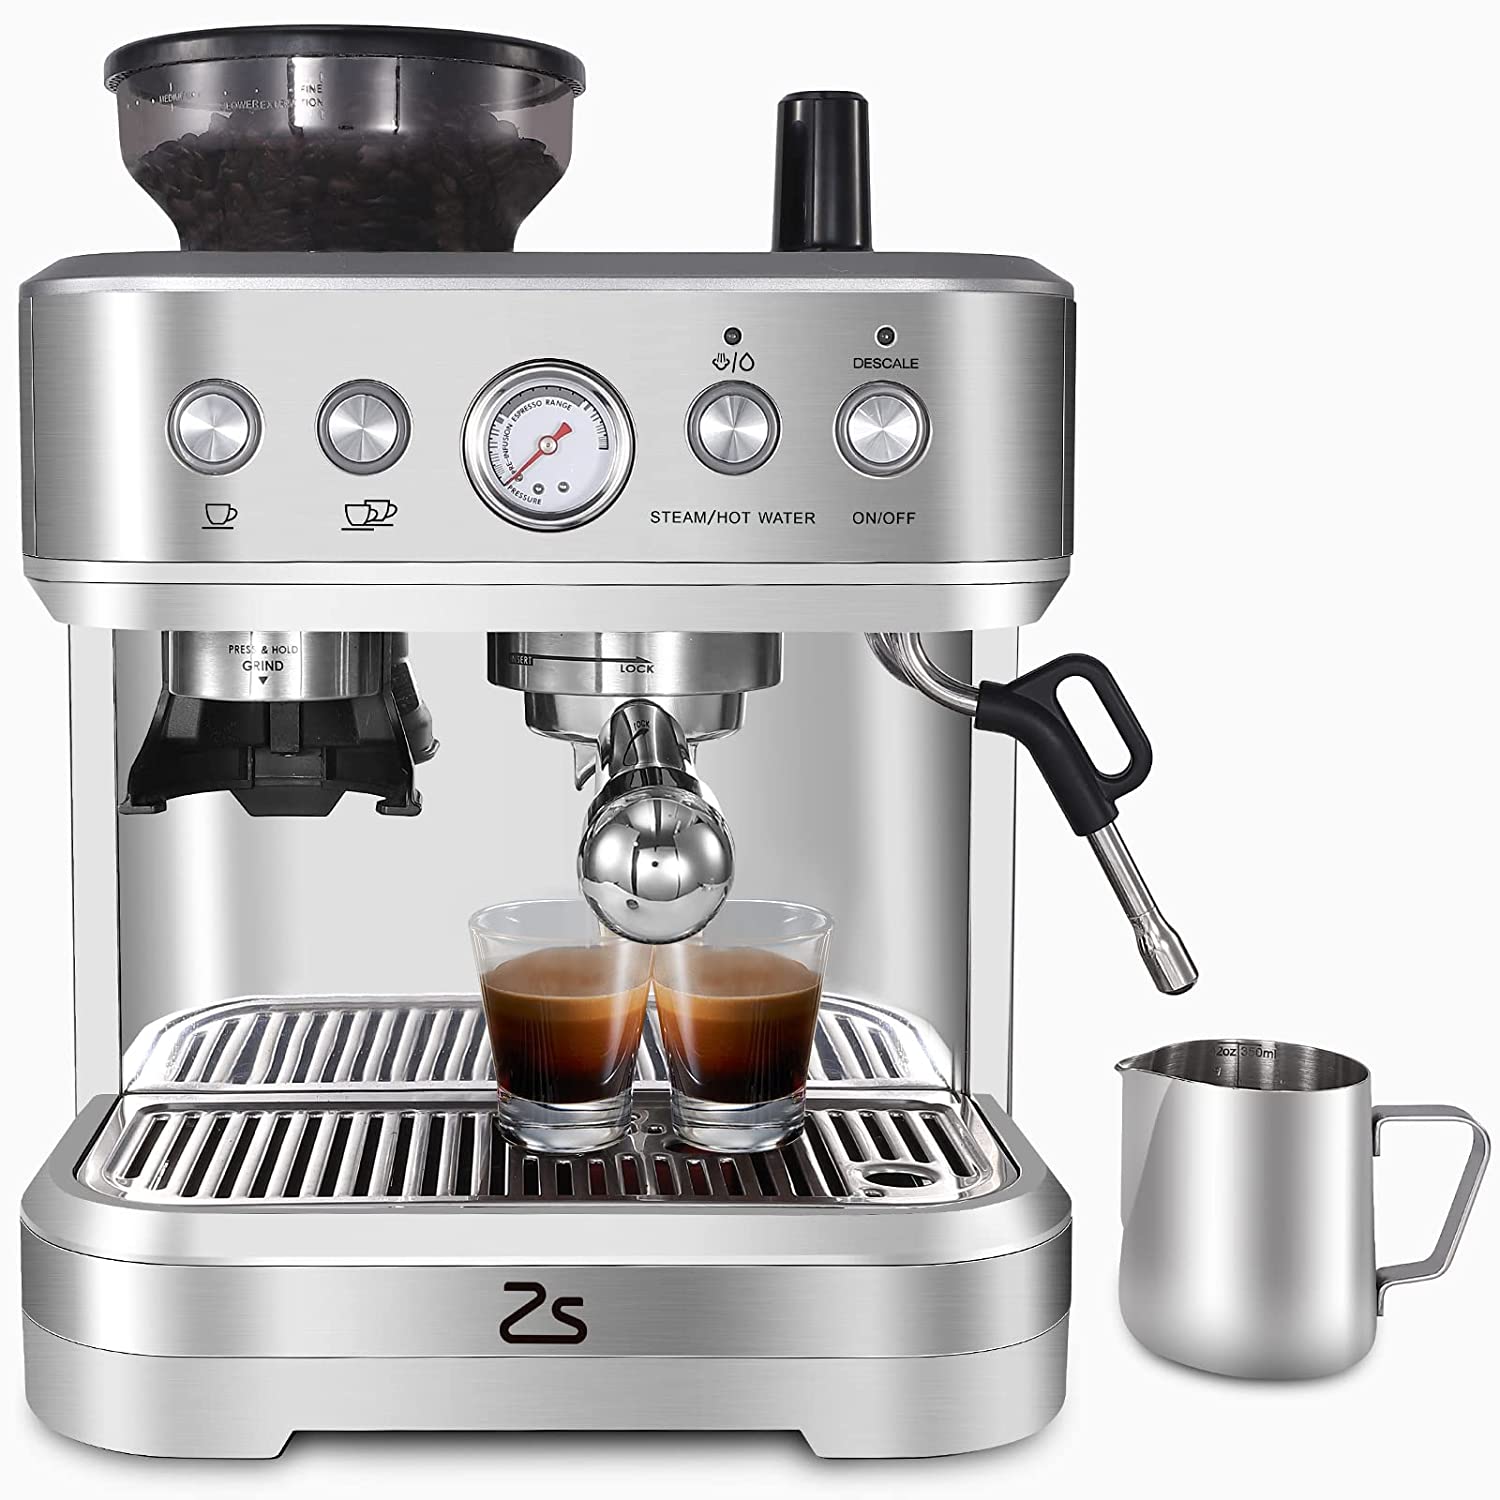 Espresso Machine with Milk Frother Steaming Wand, Barista Coffee Machine  with Pr